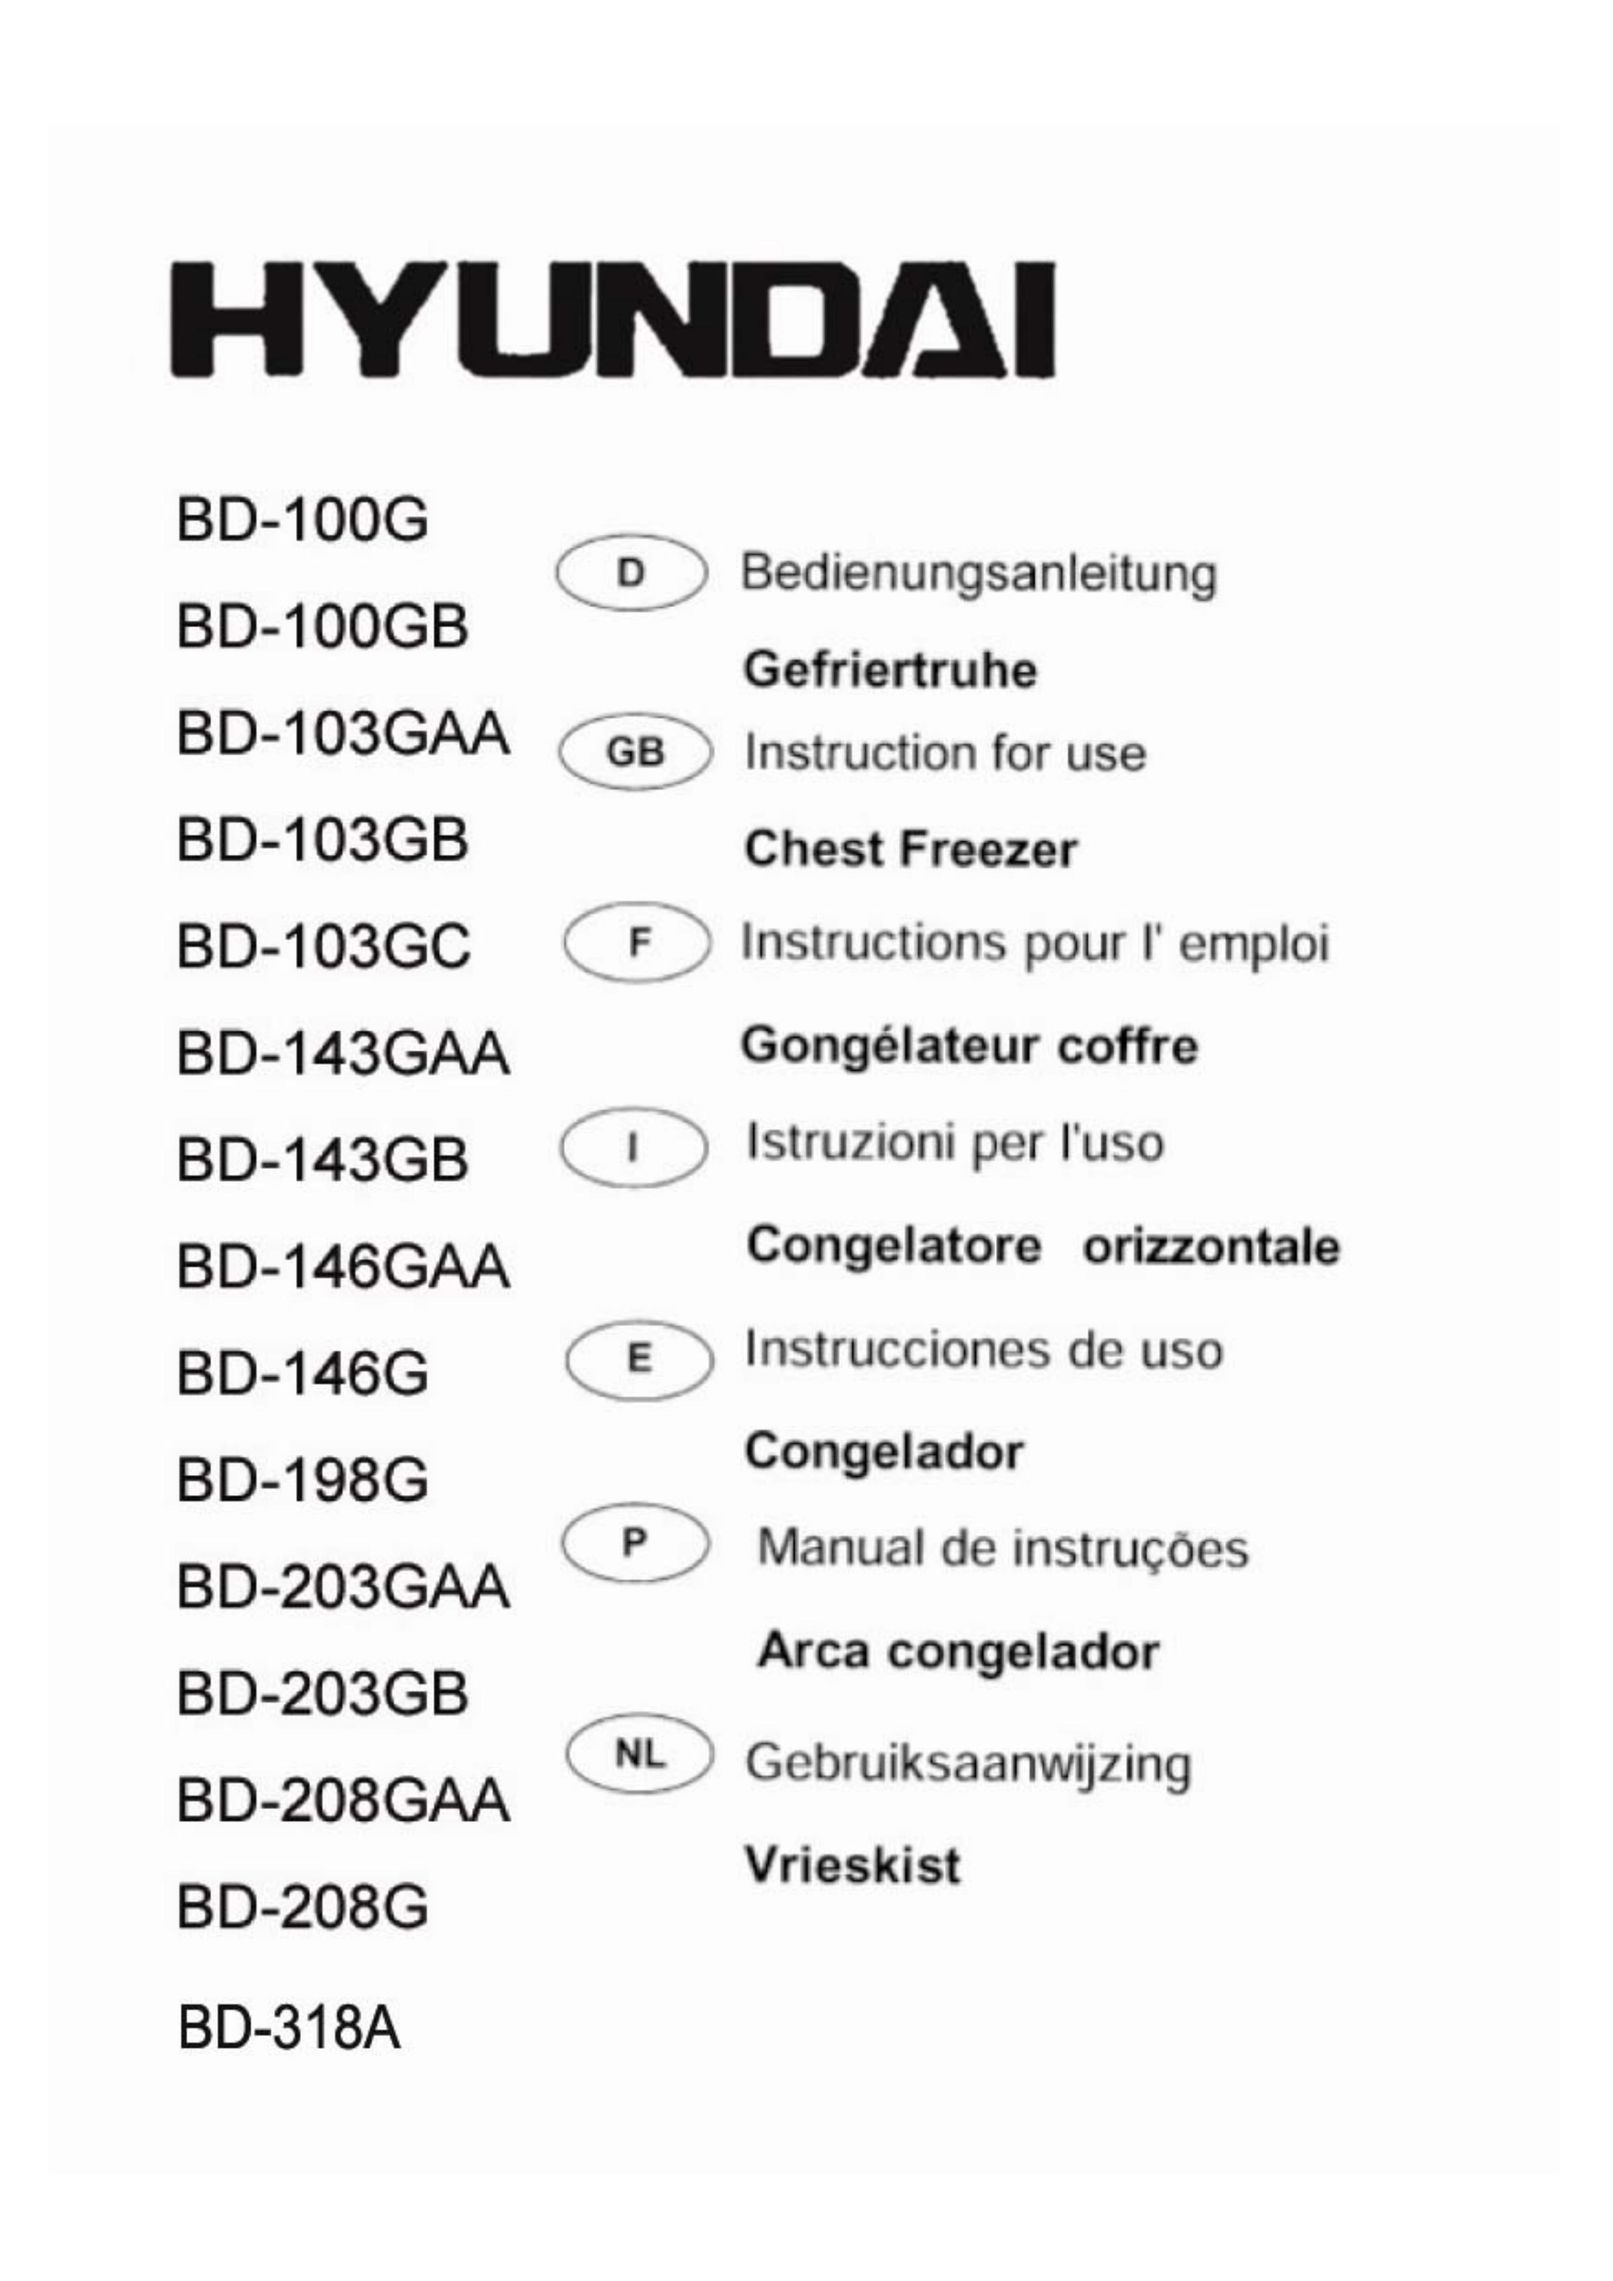 Hyundai BD-103GB Freezer User Manual